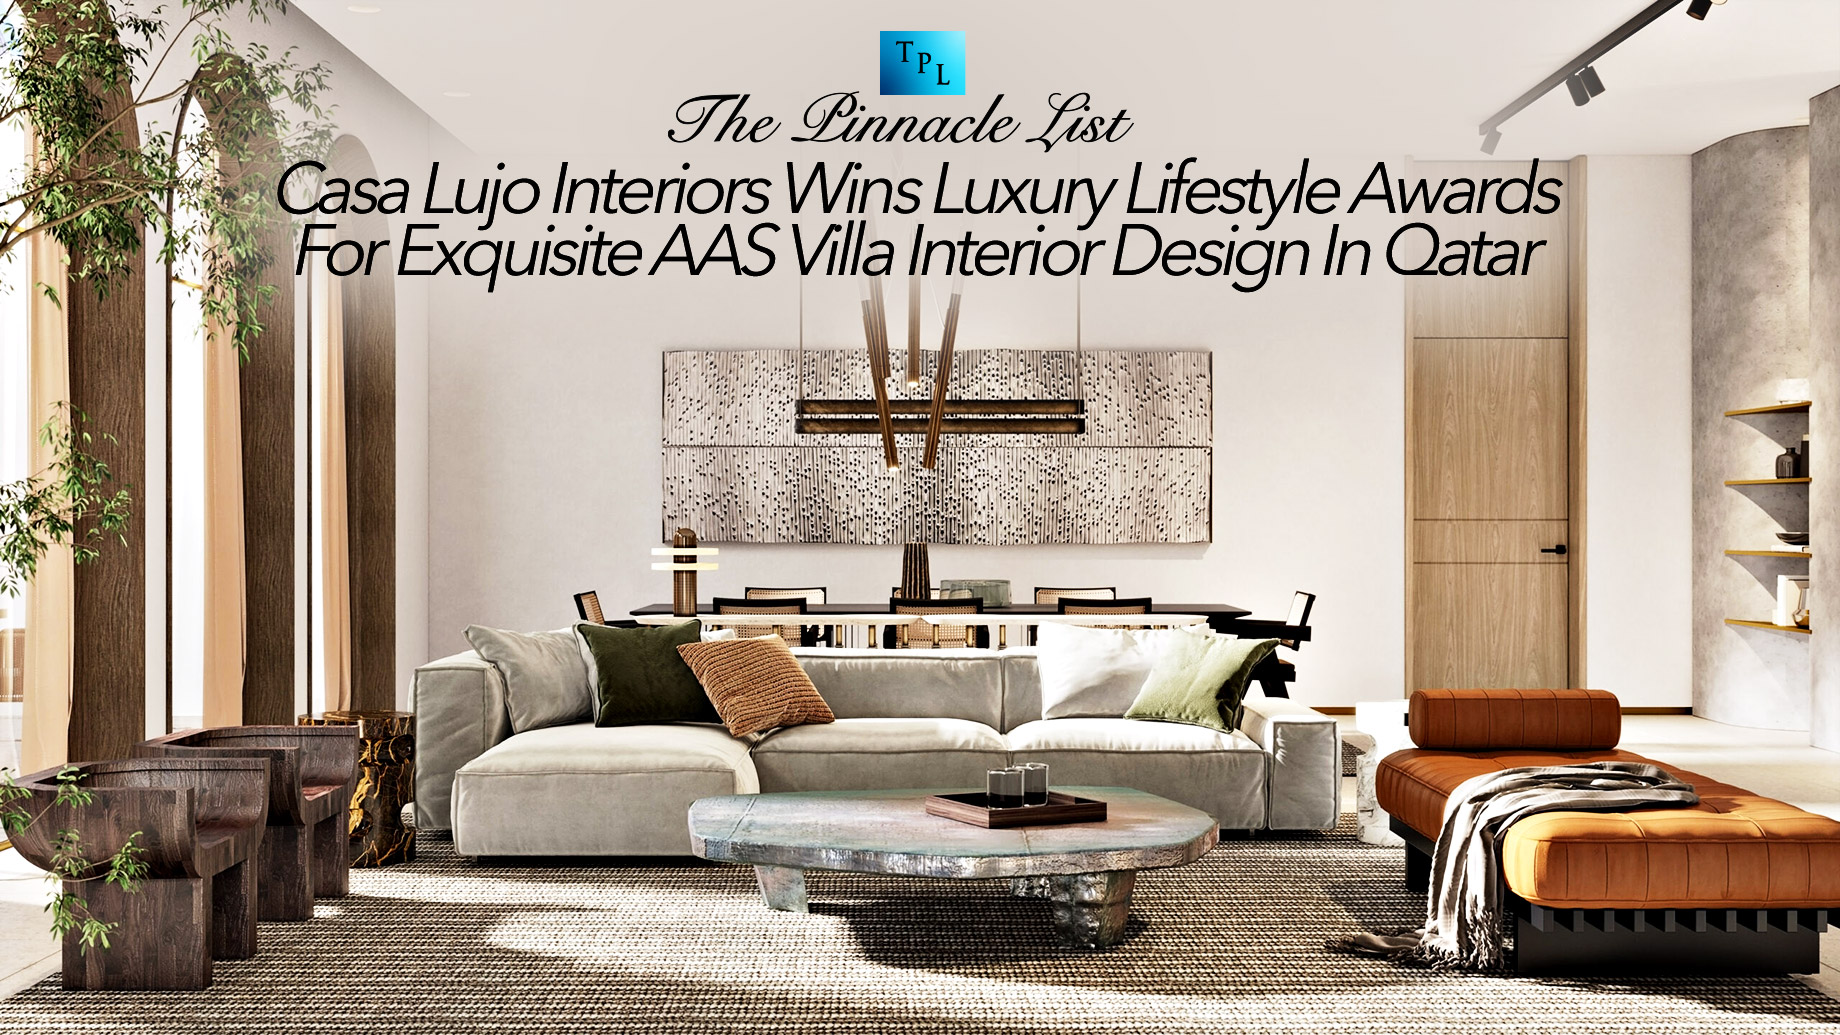 Casa Lujo Interiors Wins Luxury Lifestyle Awards For Exquisite AAS Villa Interior Design In Qatar